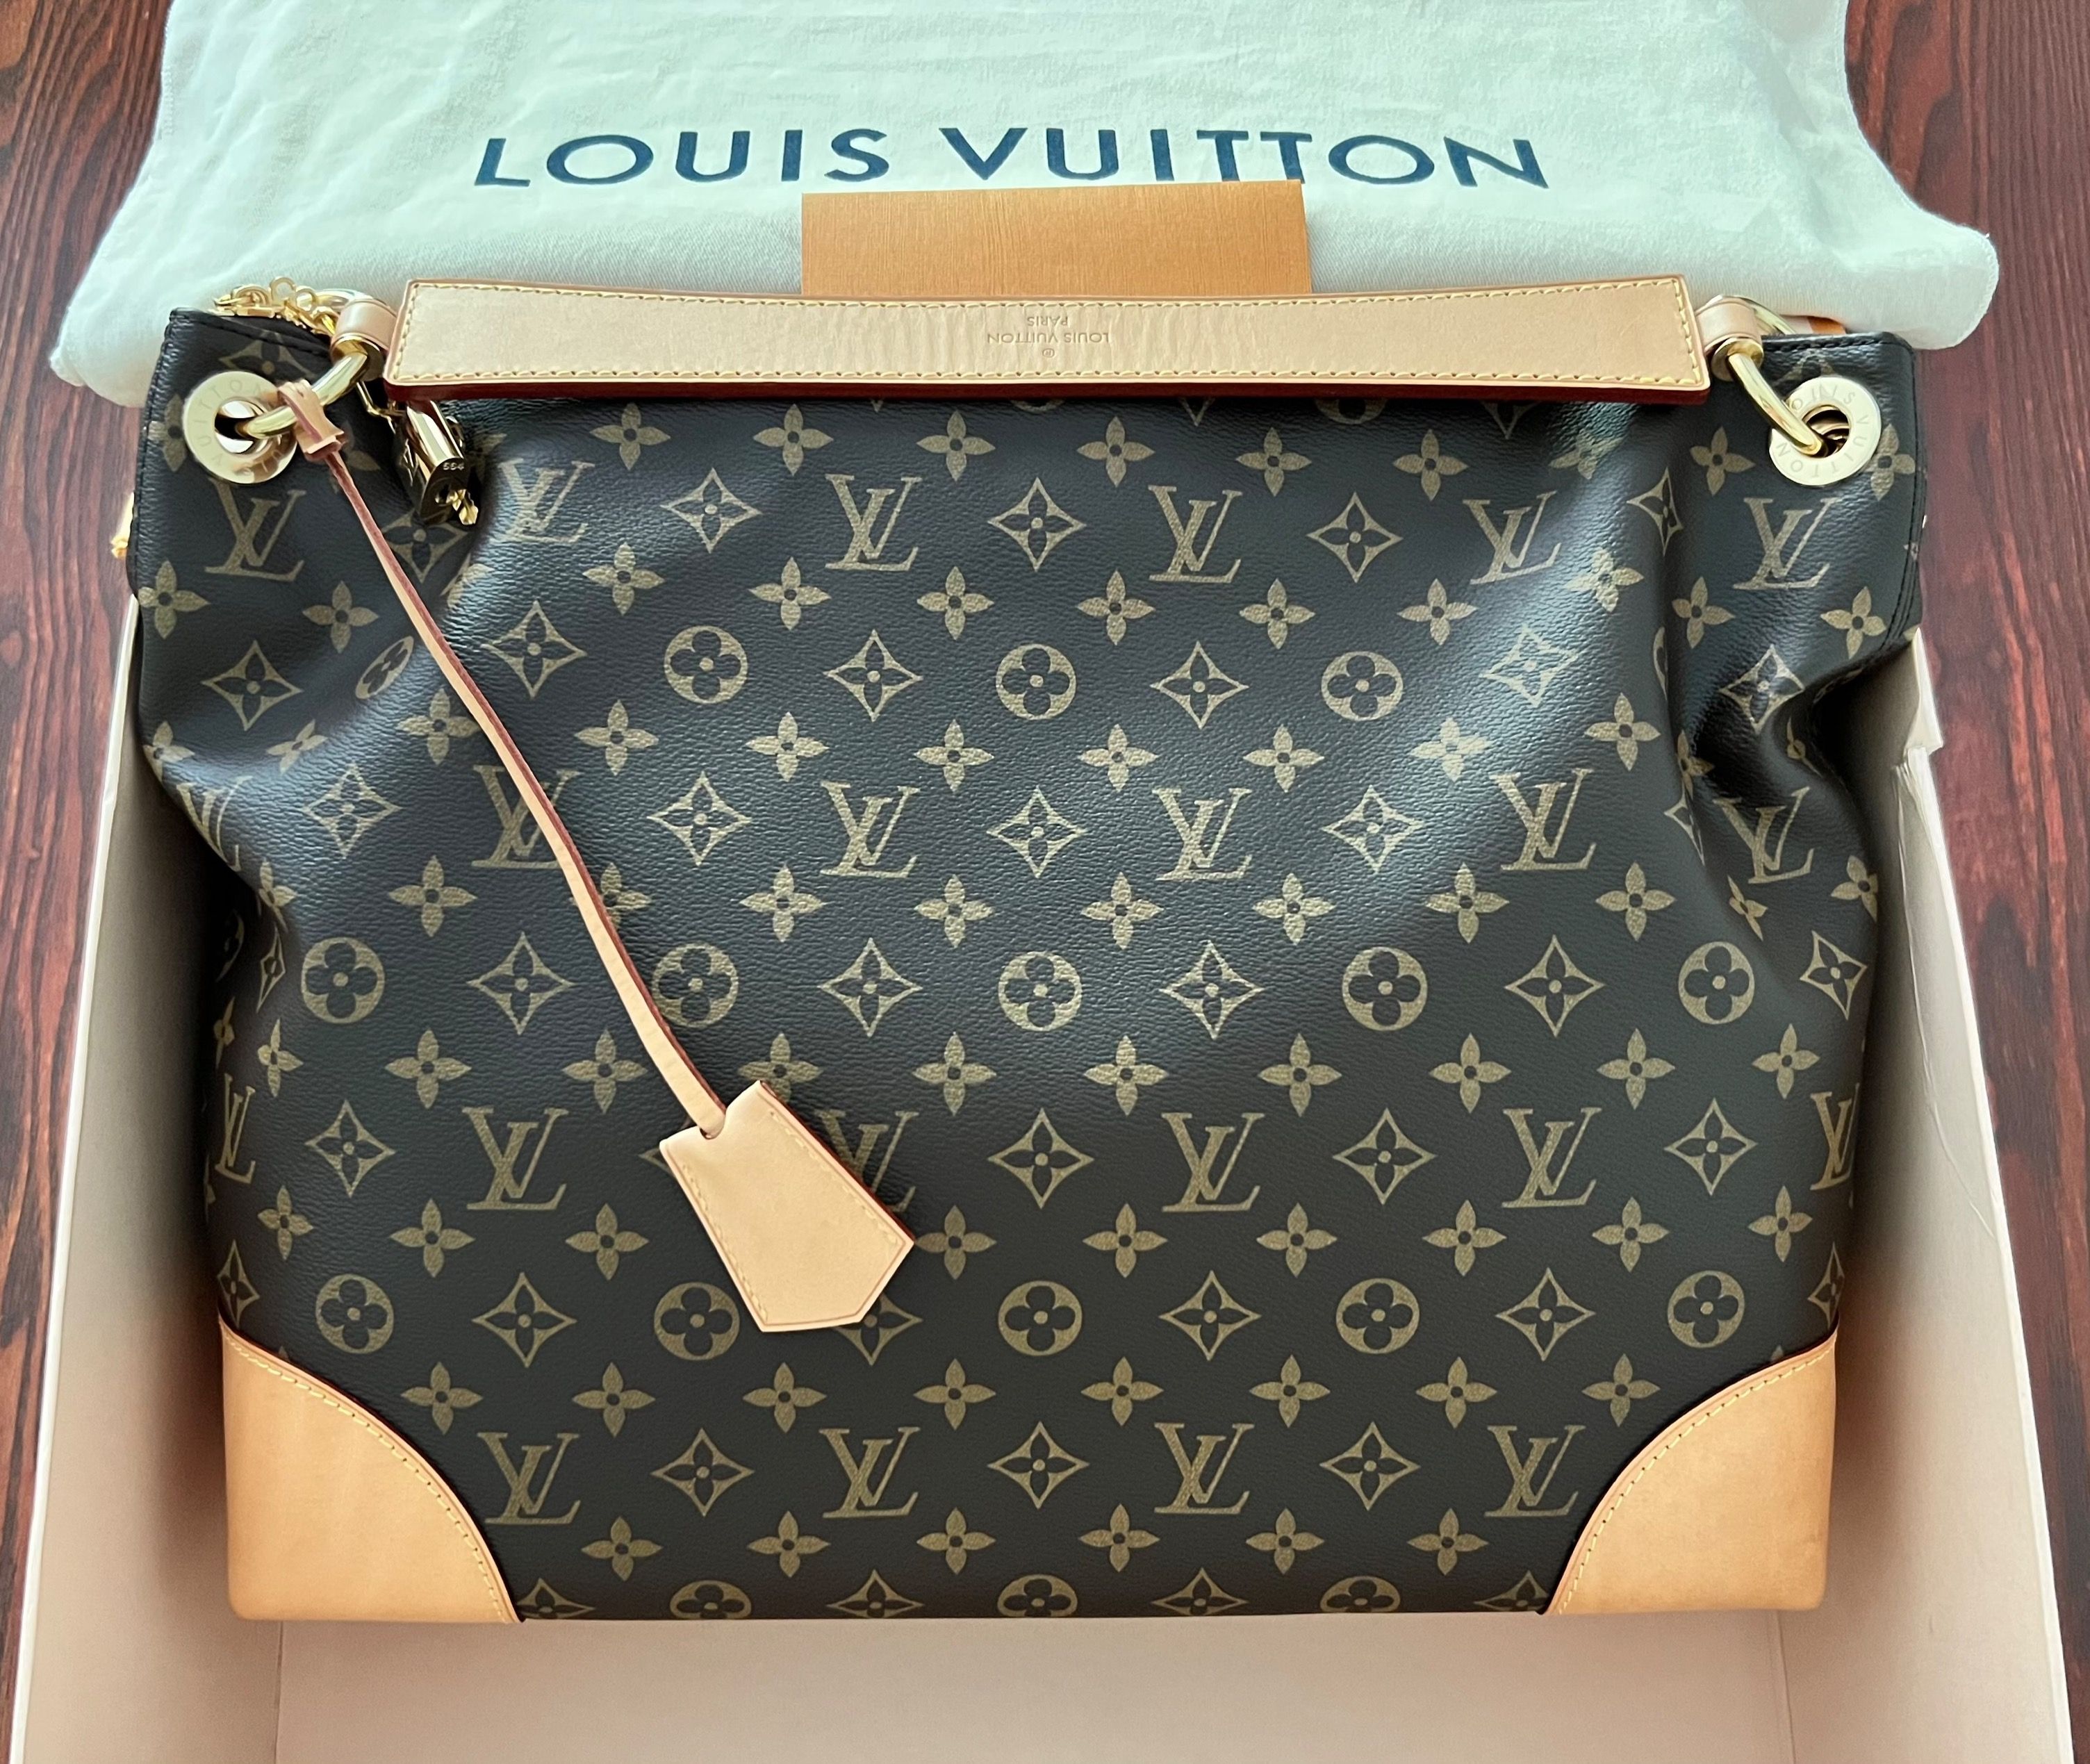 LNIB Louis Vuitton Berri MM Monogram Canvas Shoulder Bag in near